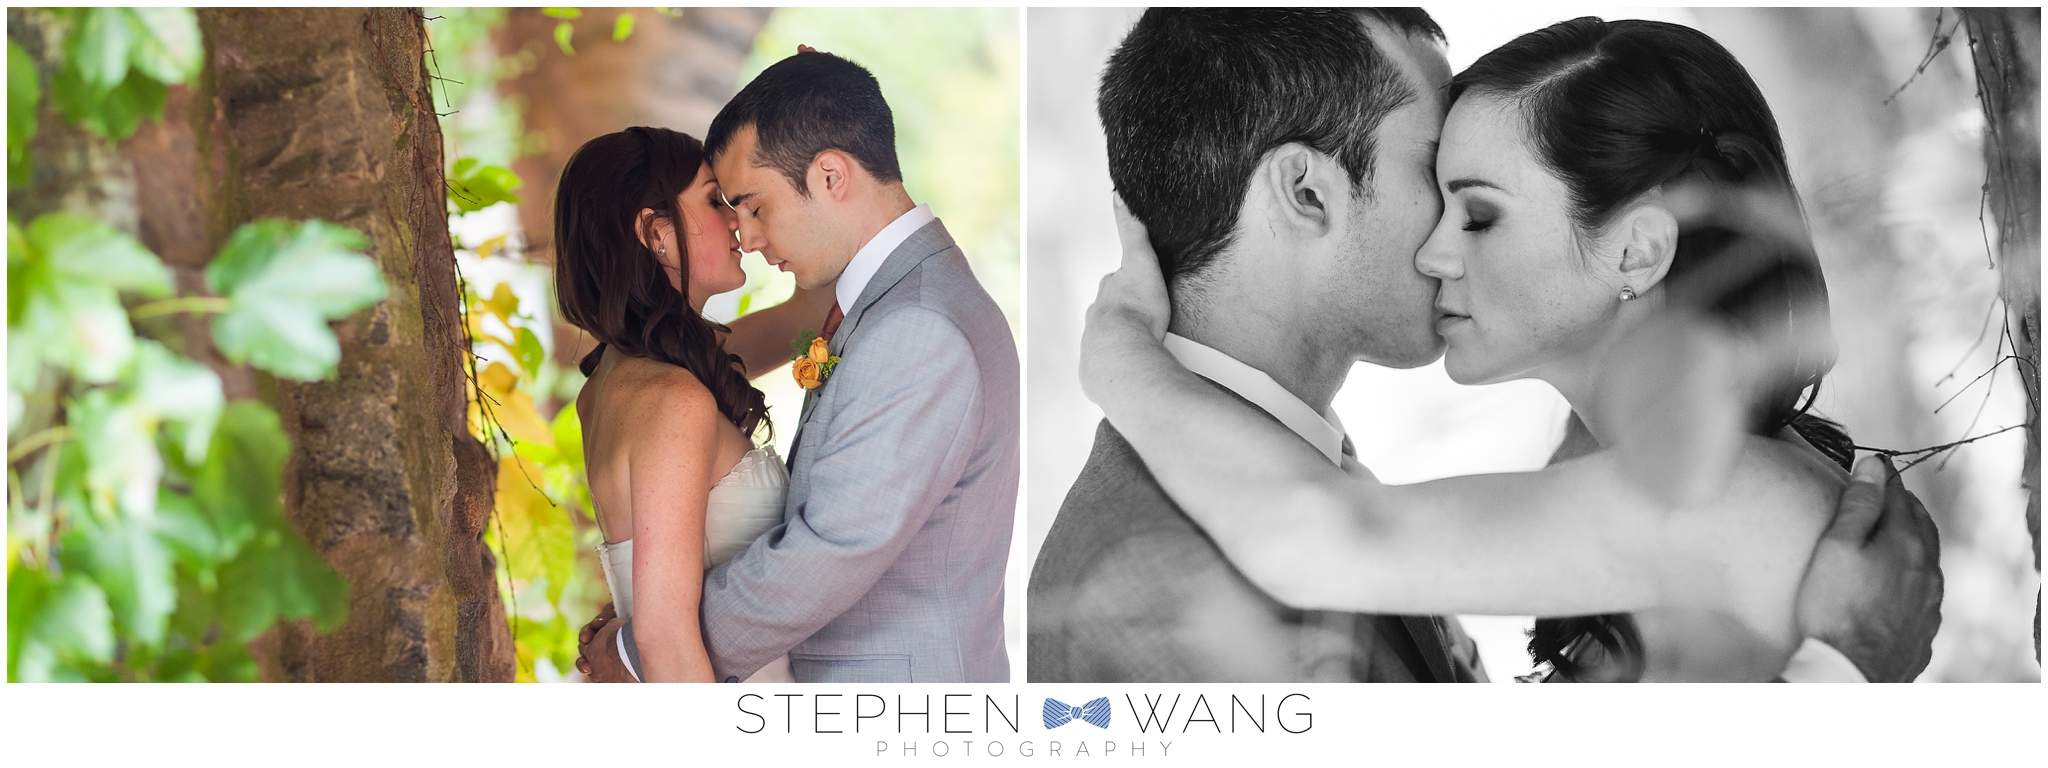 Stephen Wang Photography wedding connecticut deep river lace factory wedding photography connecticut photographer-01-22_0013.jpg